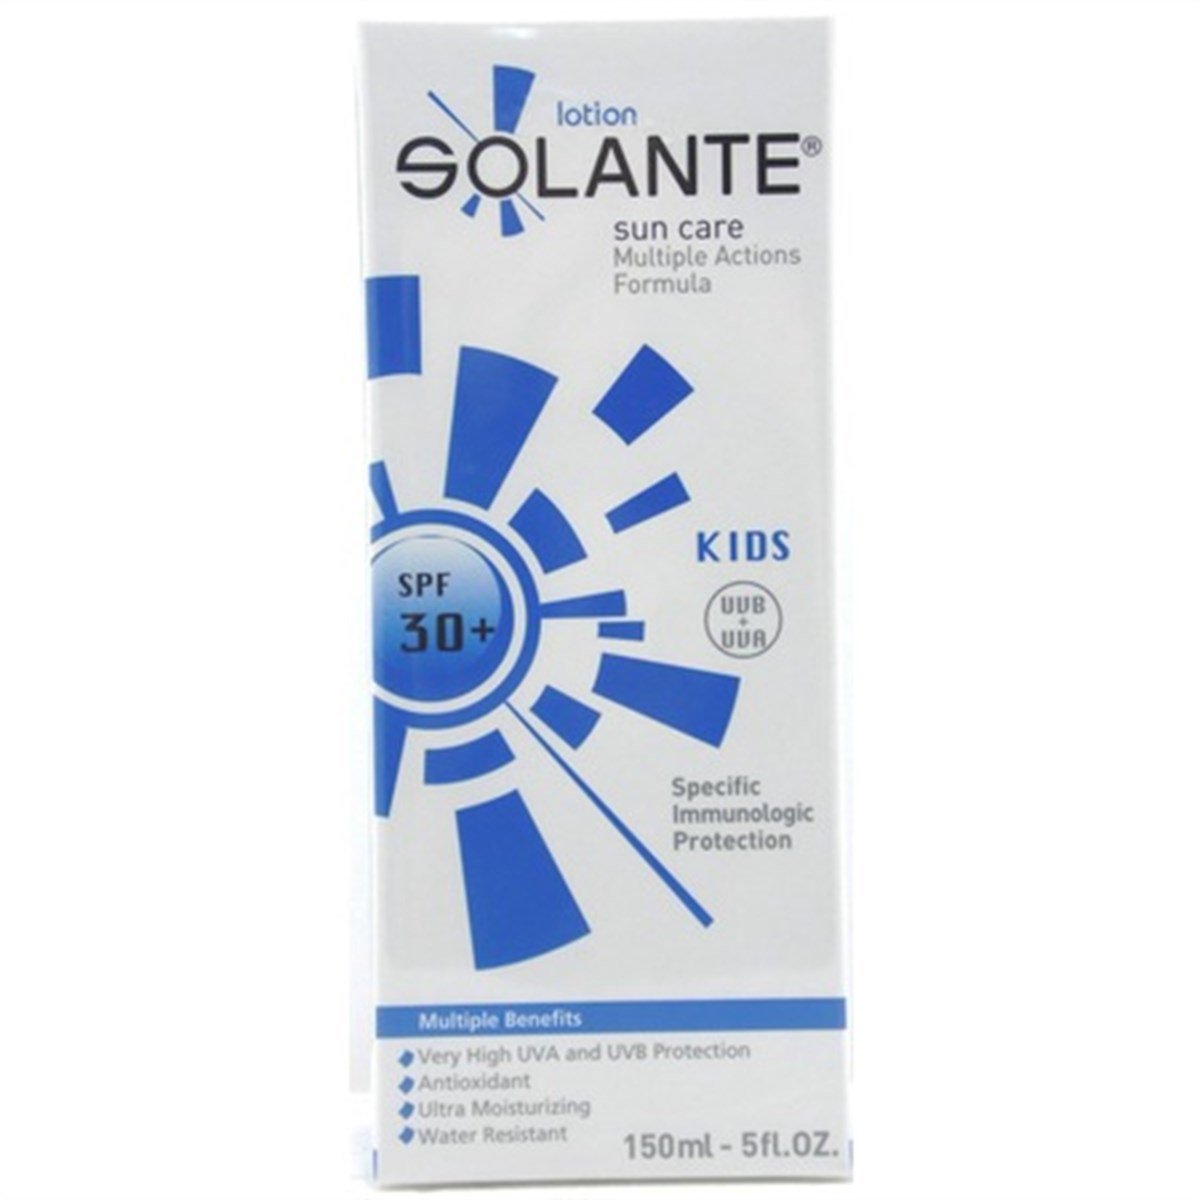 Solante Çocuk Losyonu Spf 30+ 150ml Fiyatları | Dermosiparis.com